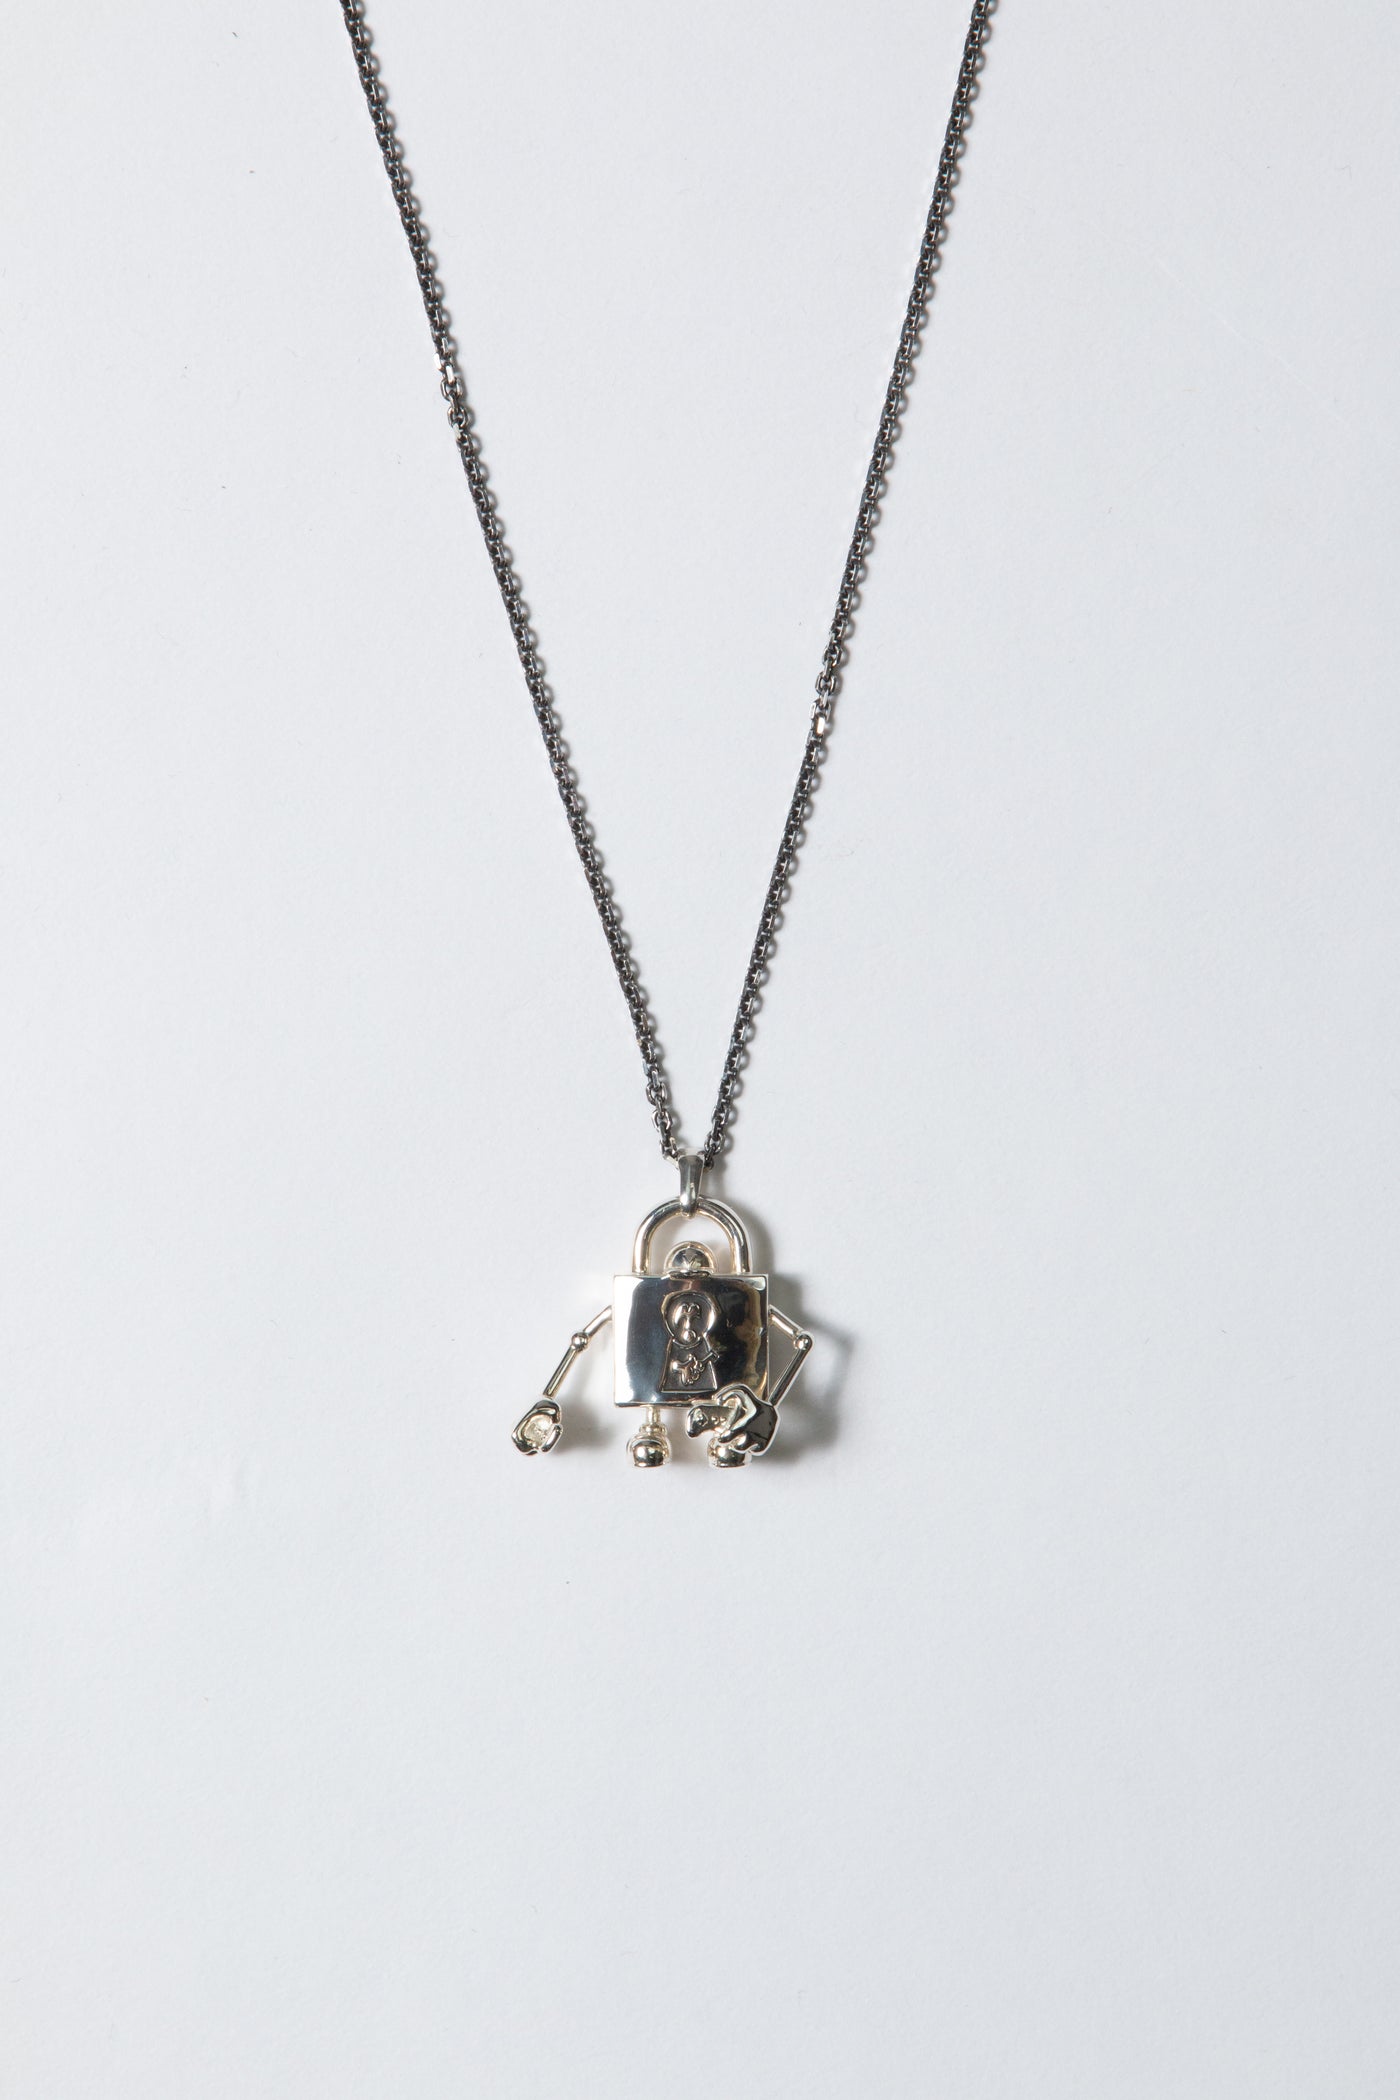 vaultroom DEVIL necklace | www.innoveering.net